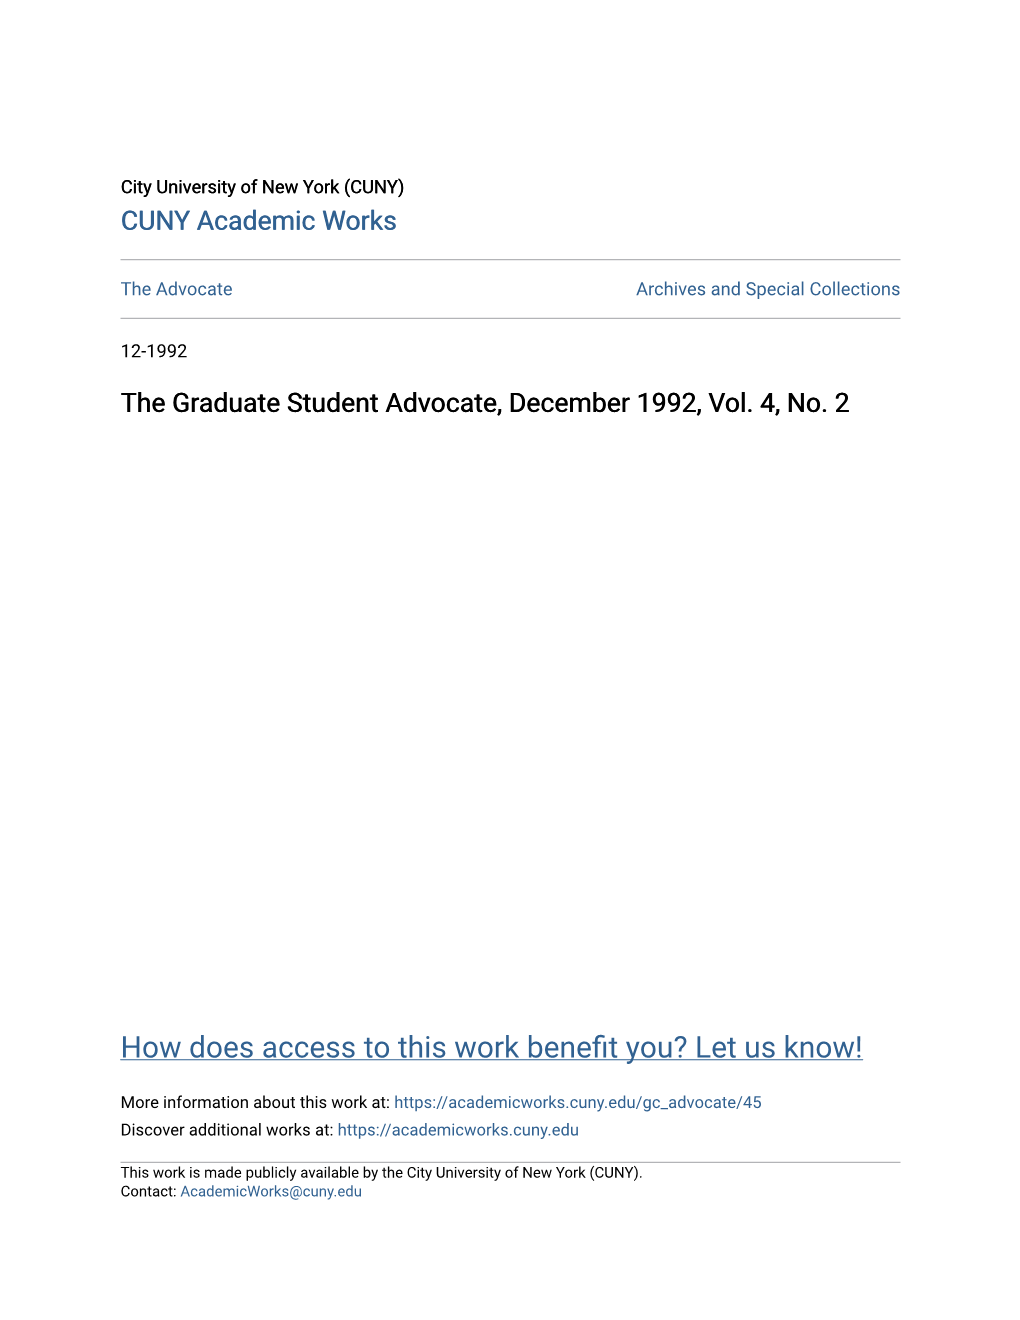 The Graduate Student Advocate, December 1992, Vol. 4, No. 2